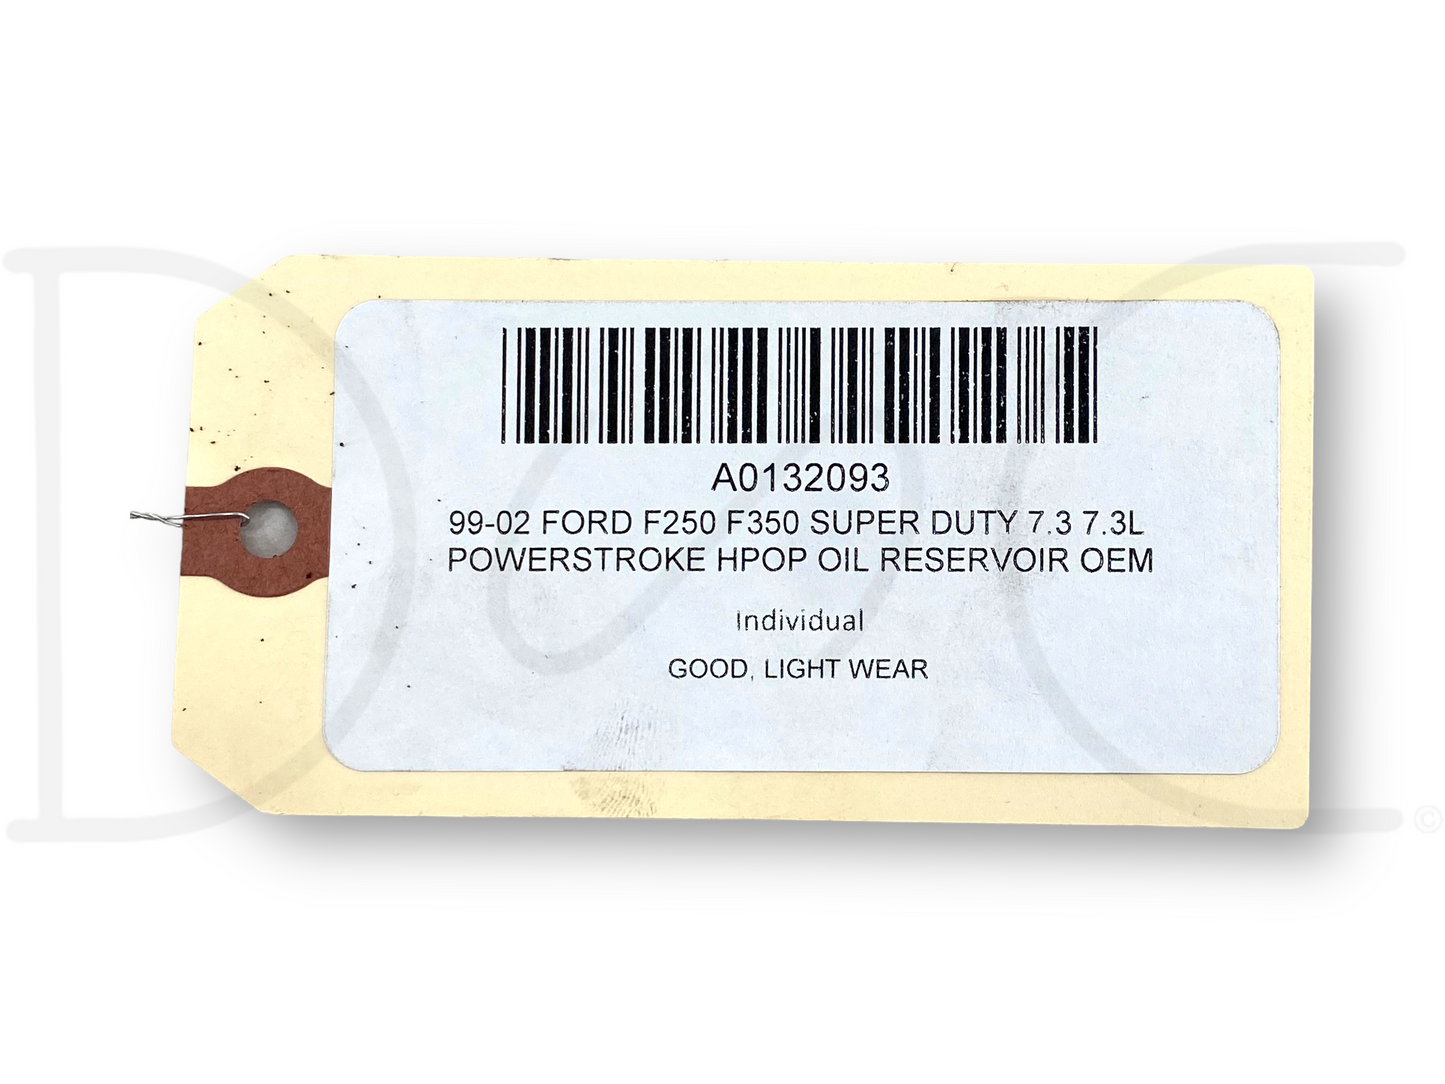 99-02 Ford F250 F350 Super Duty 7.3 7.3L Powerstroke HPOP Oil Reservoir OEM